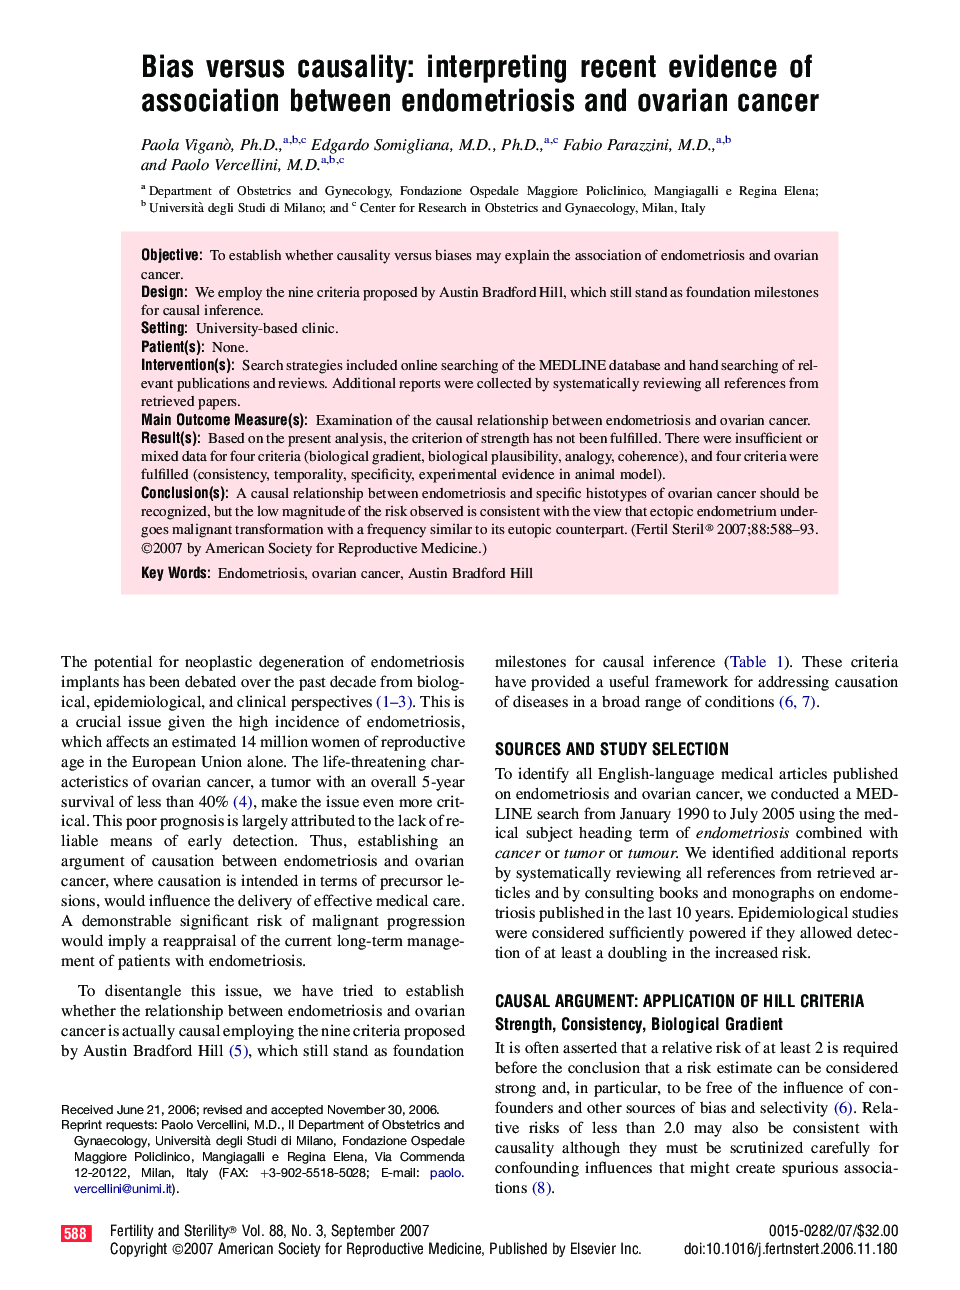 Bias versus causality: interpreting recent evidence of association between endometriosis and ovarian cancer